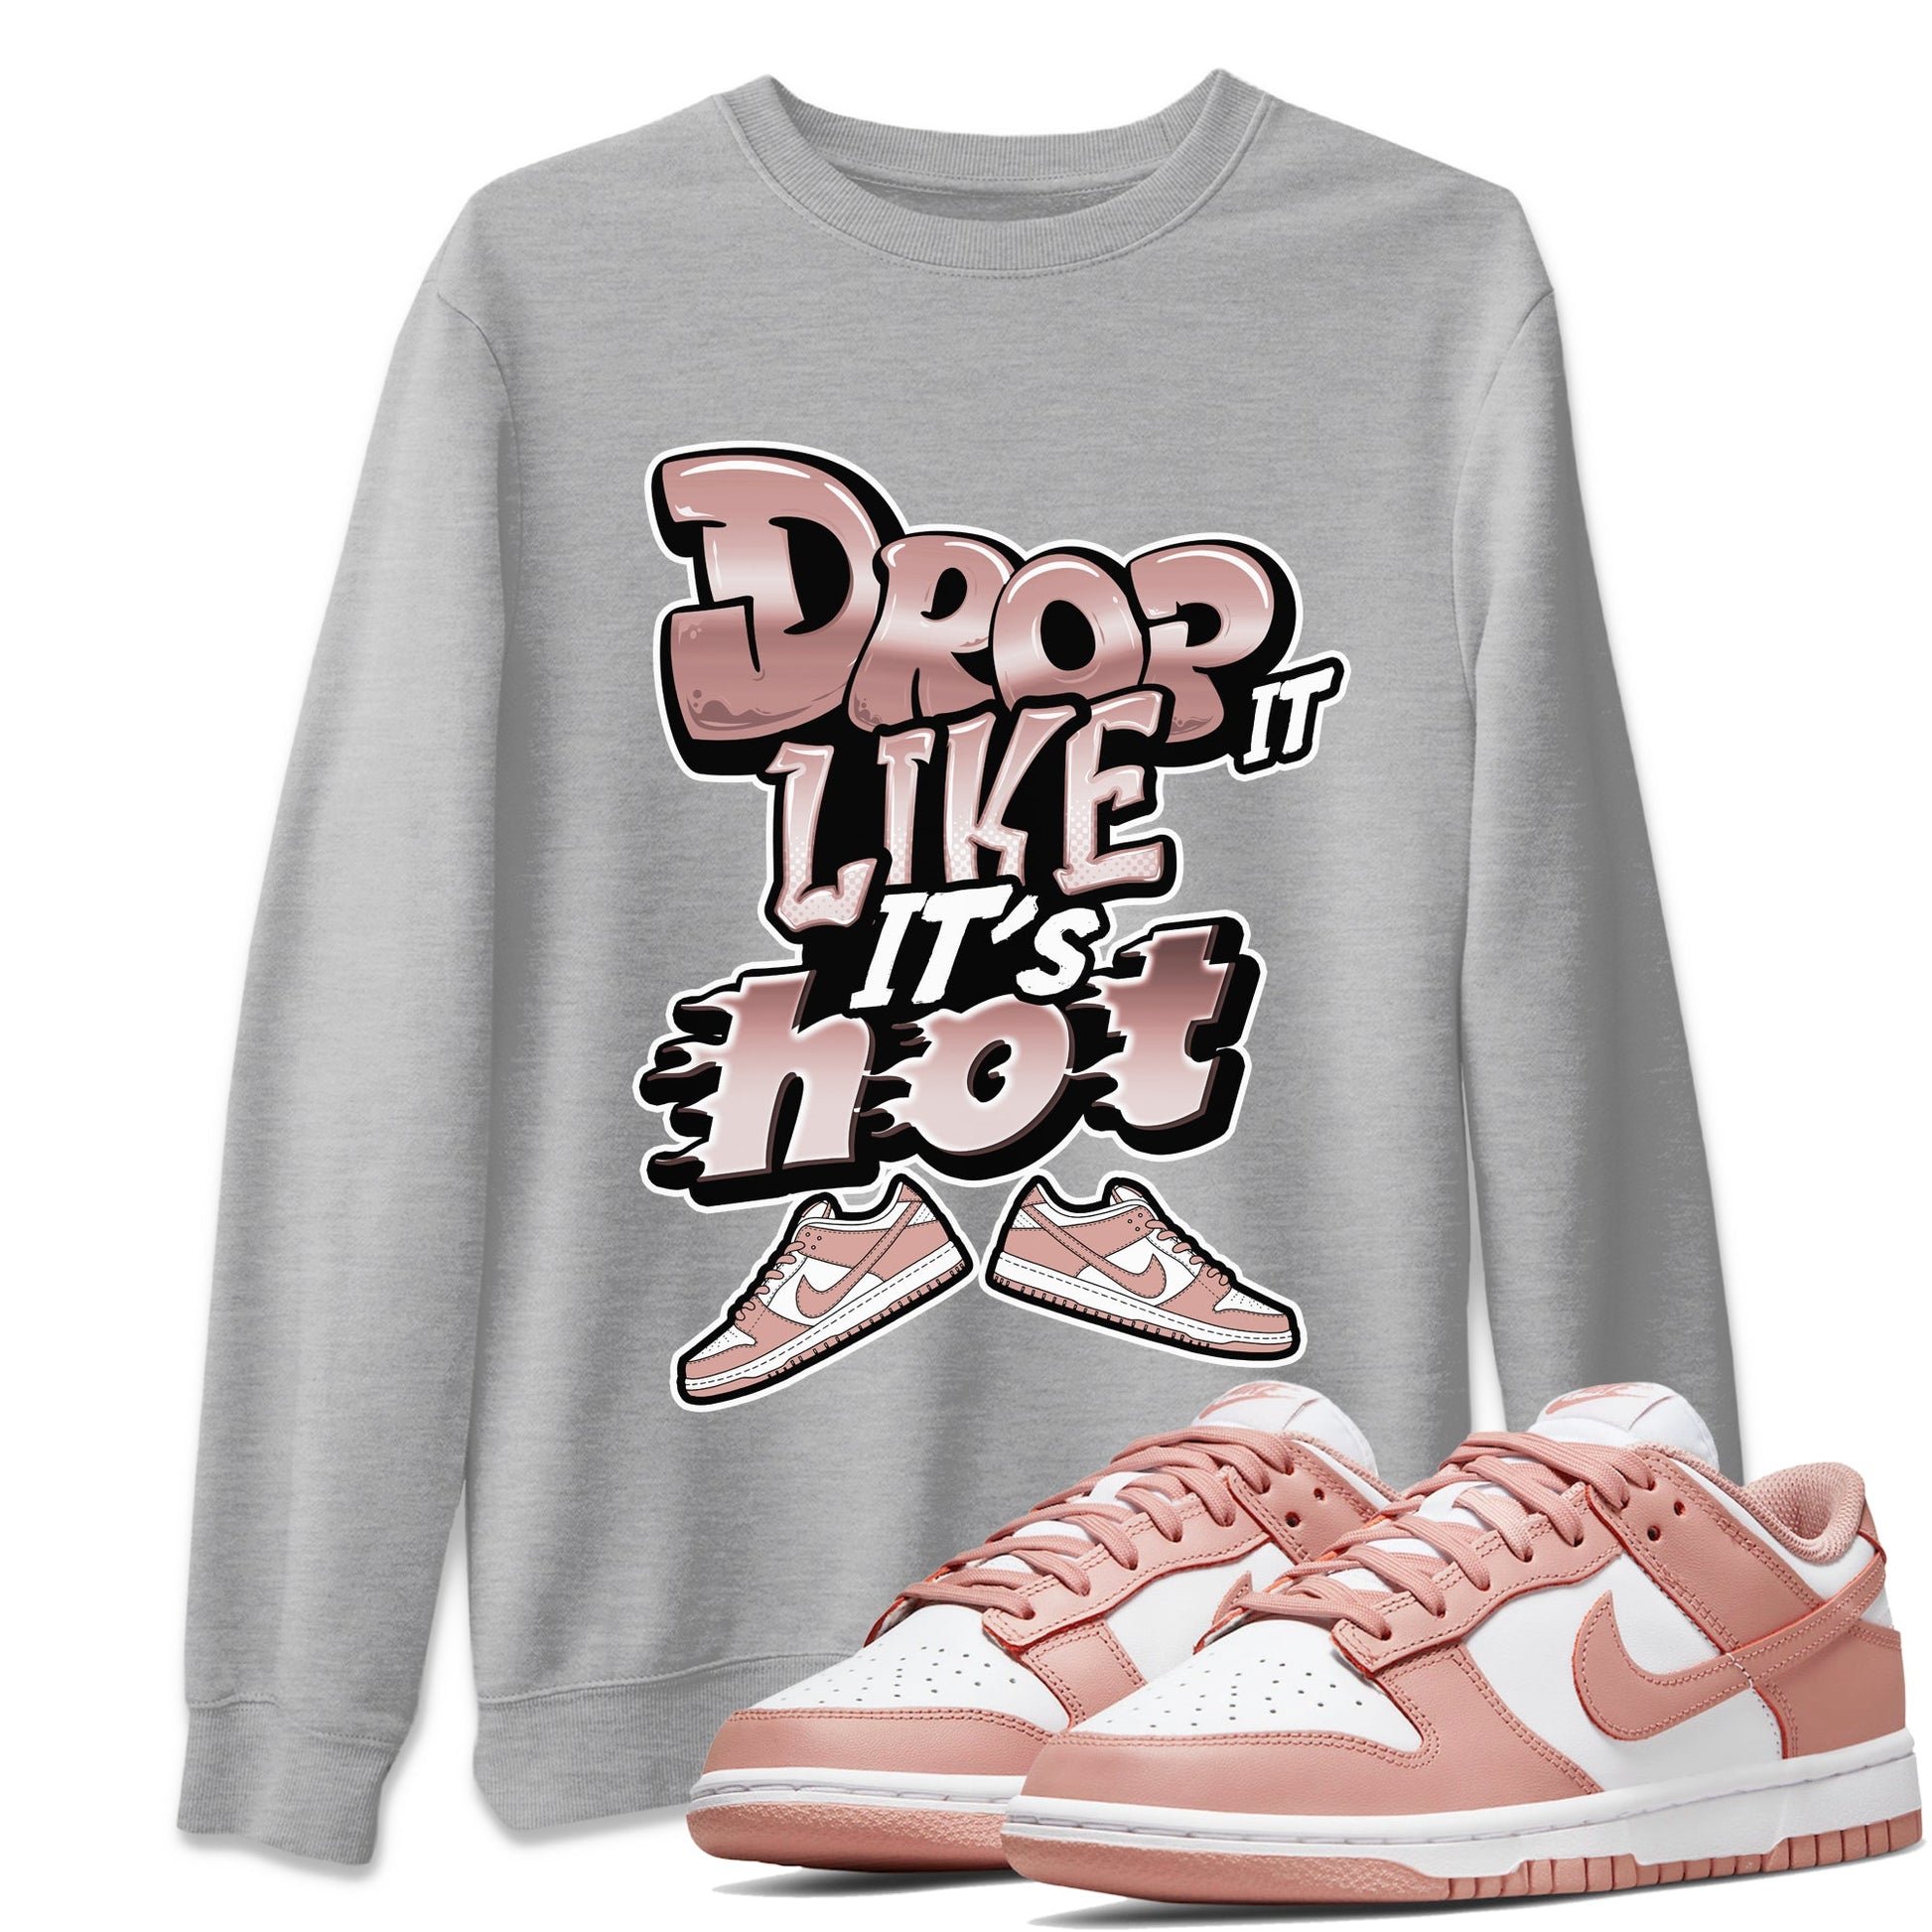 Dunk Rose Whisper shirt to match jordans Drop It Like It's Hot sneaker tees Nike Dunk LowRose Whisper SNRT Sneaker Release Tees Unisex Heather Grey 1 T-Shirt